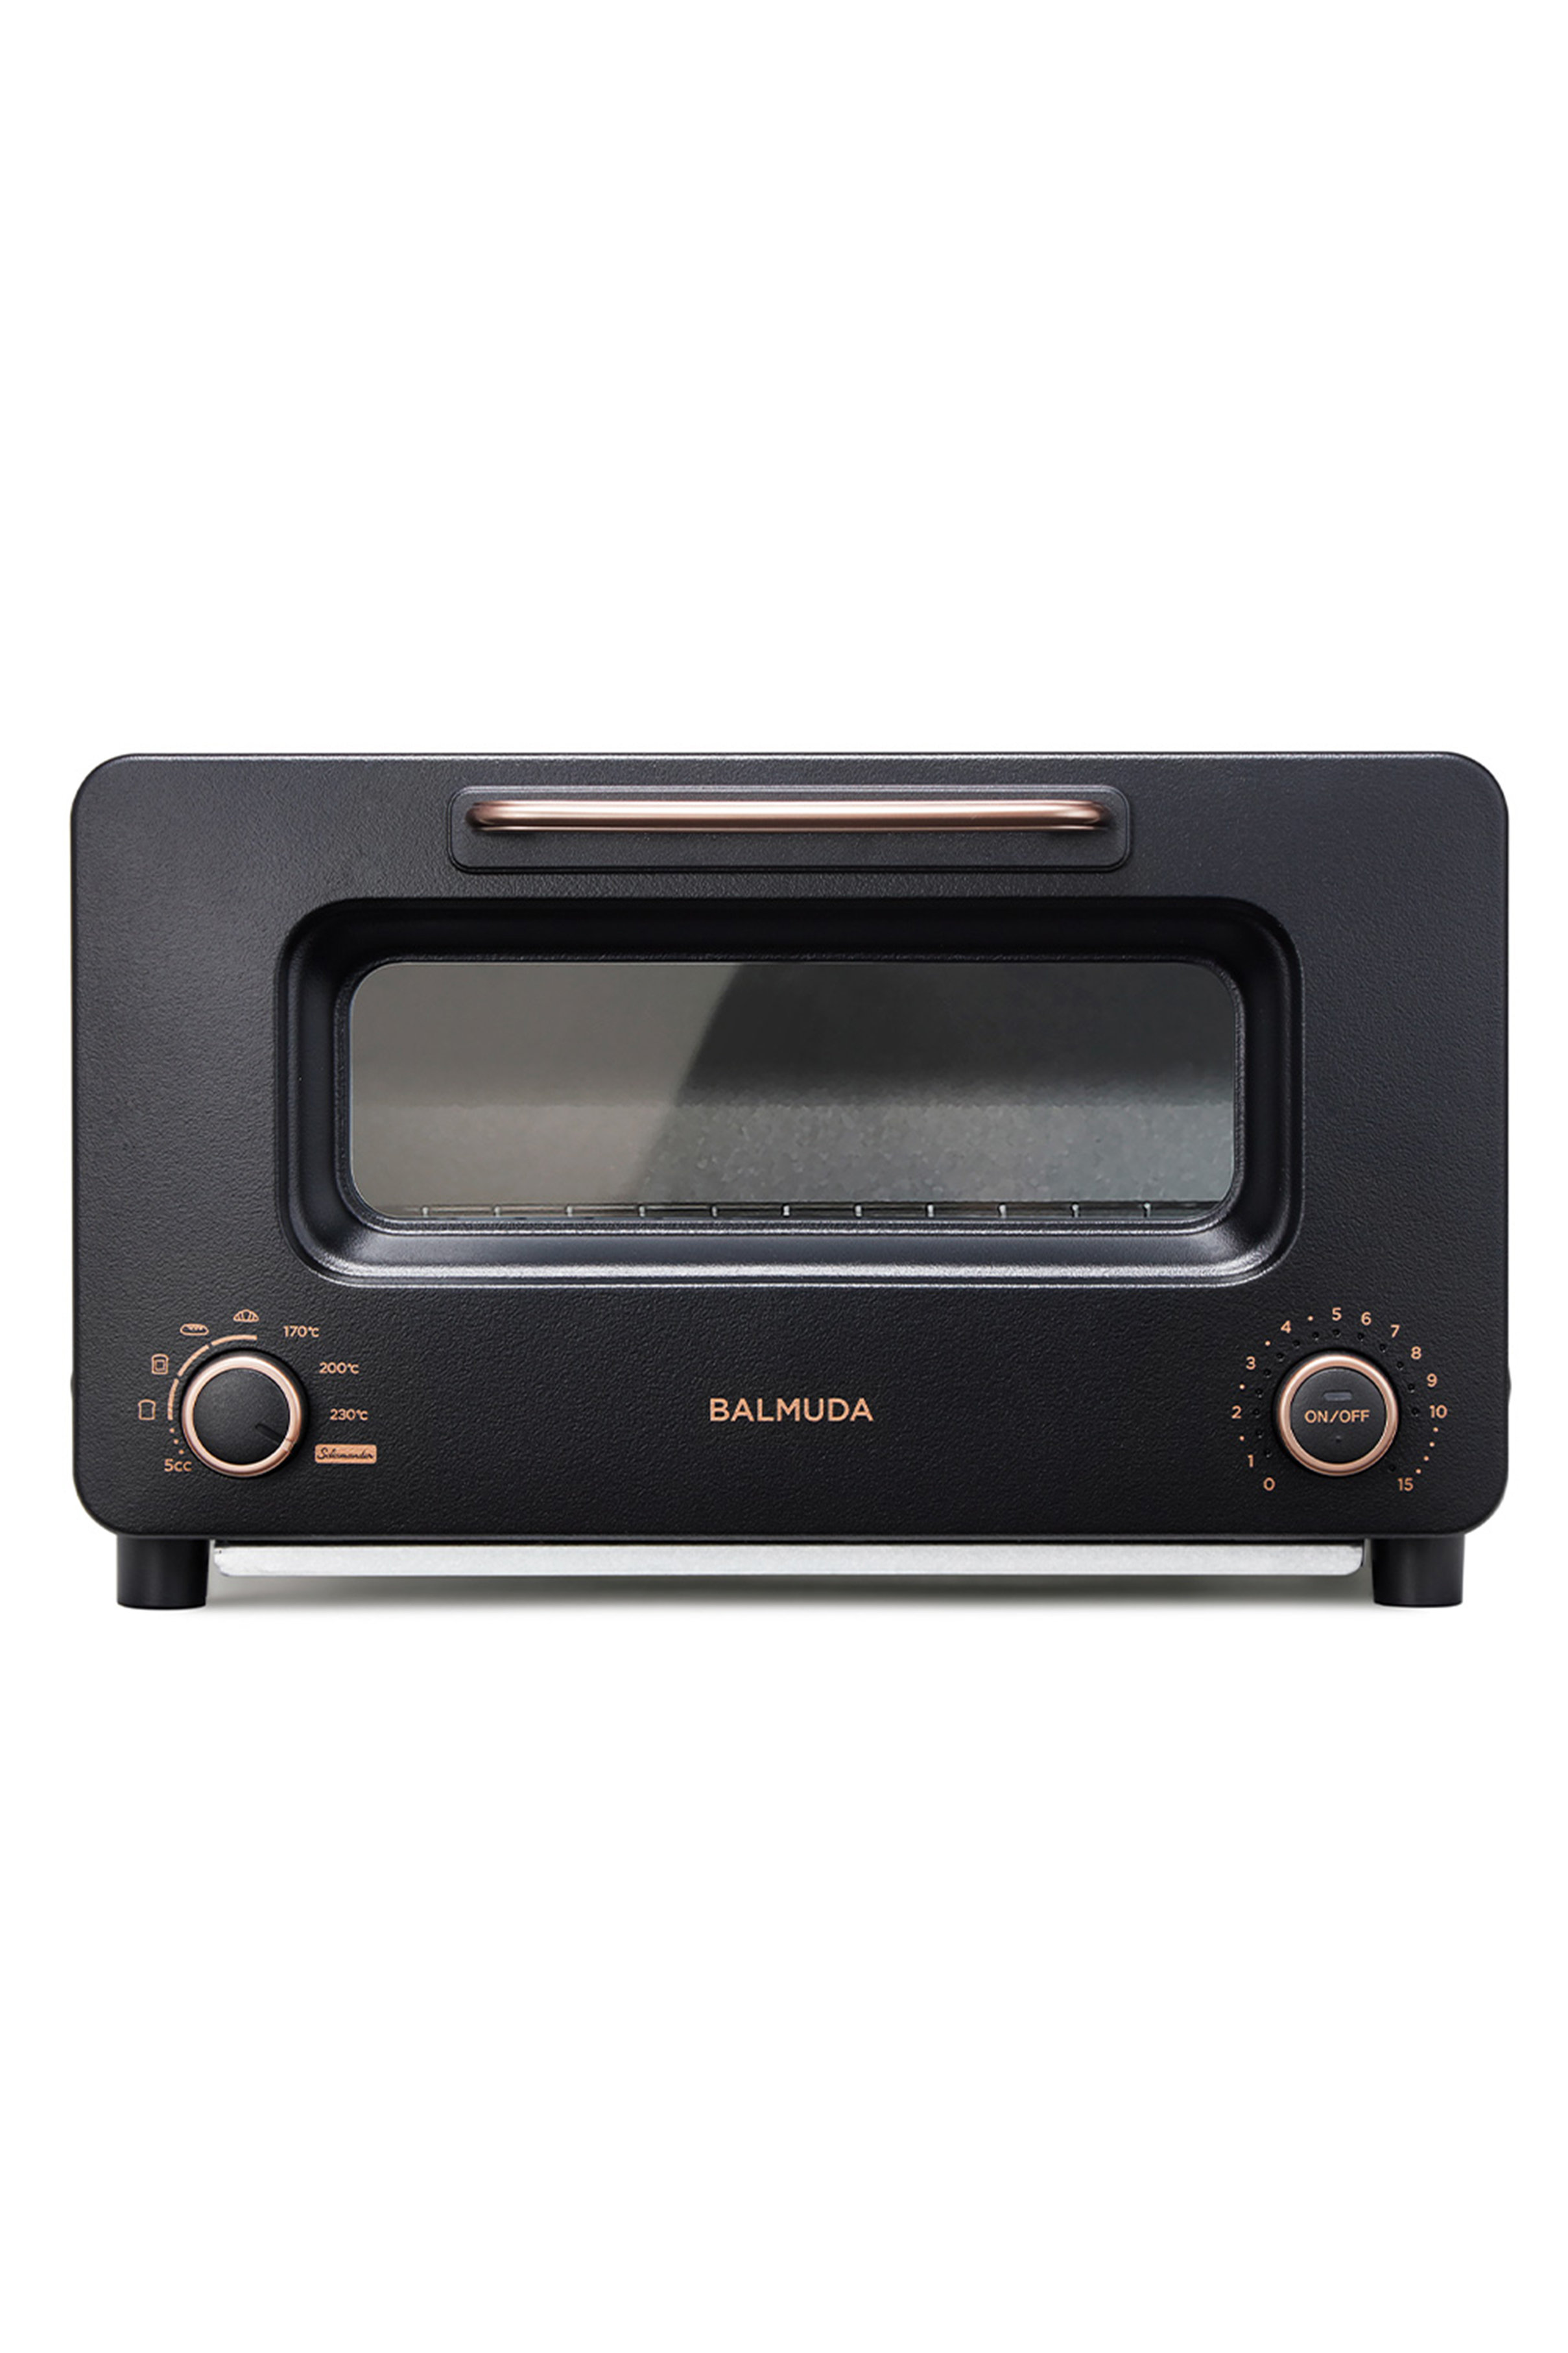 SEMPRE Balmuda The ToasterPro (ブラック N/S) センプレ ELLE SHOPの画像